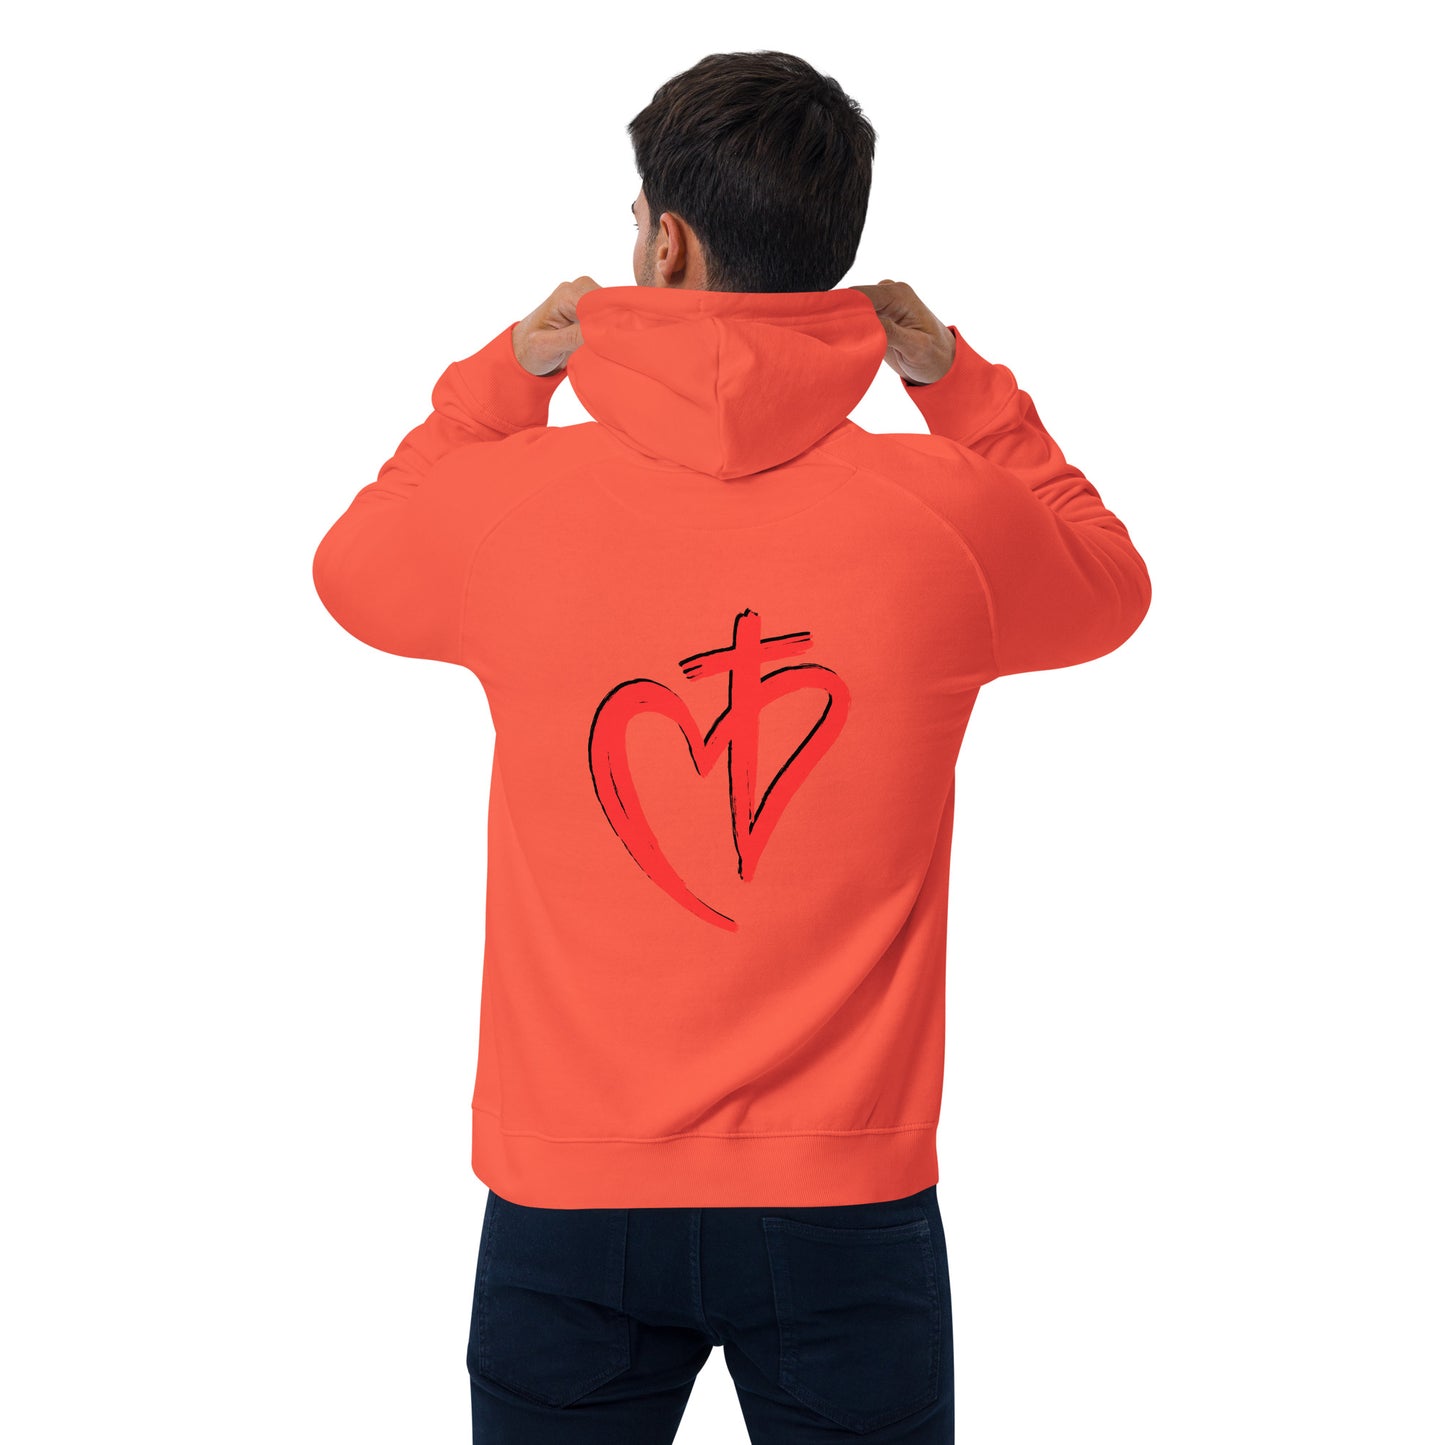 0-A-00 Jesus Cross Heart Unisex eco raglan hoodie